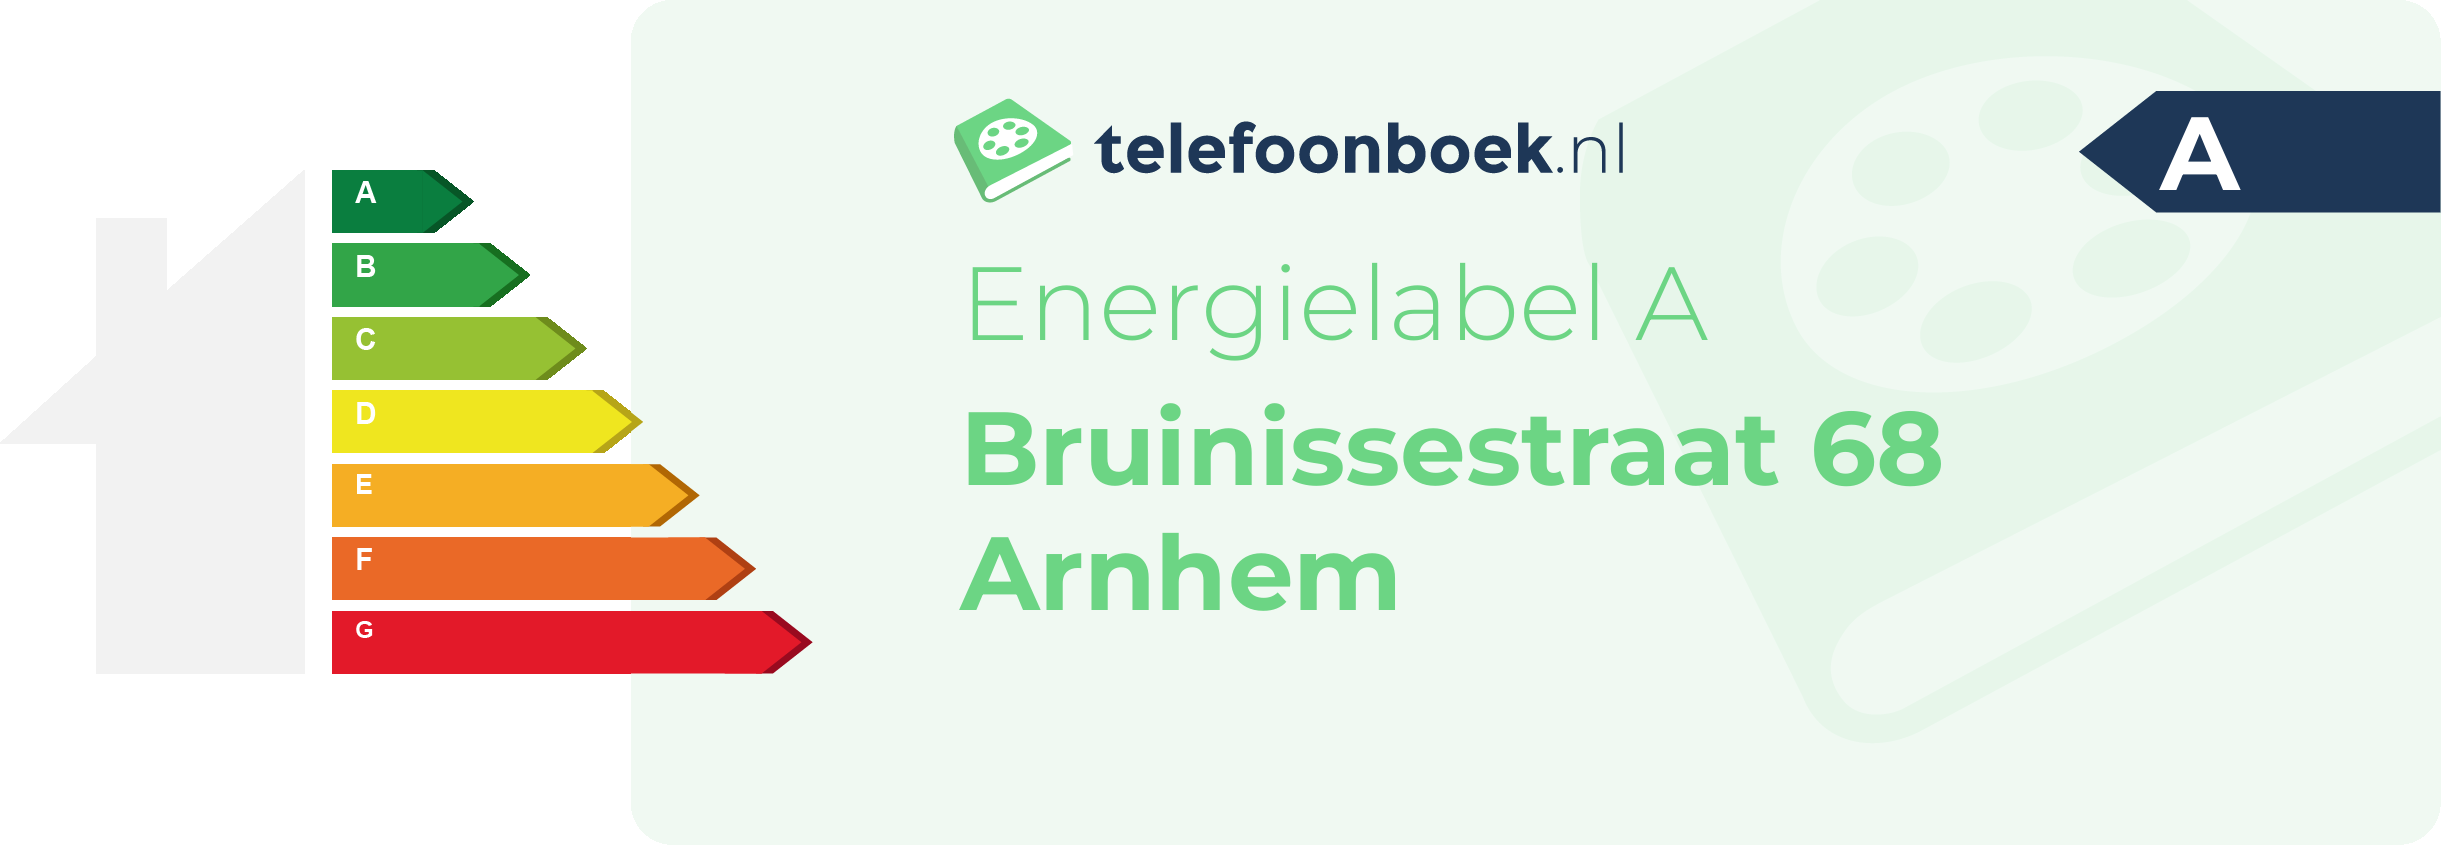 Energielabel Bruinissestraat 68 Arnhem